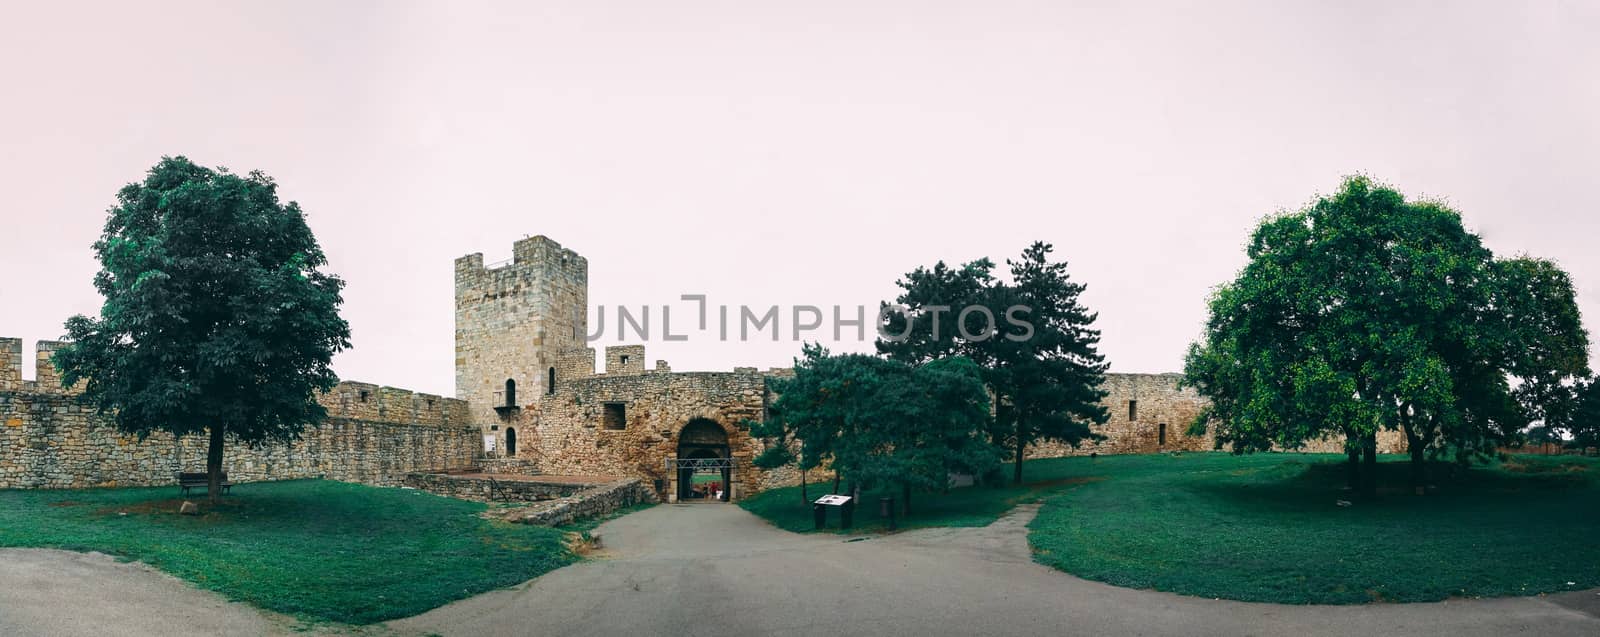 Belgrade Fortress in Serbia by Multipedia